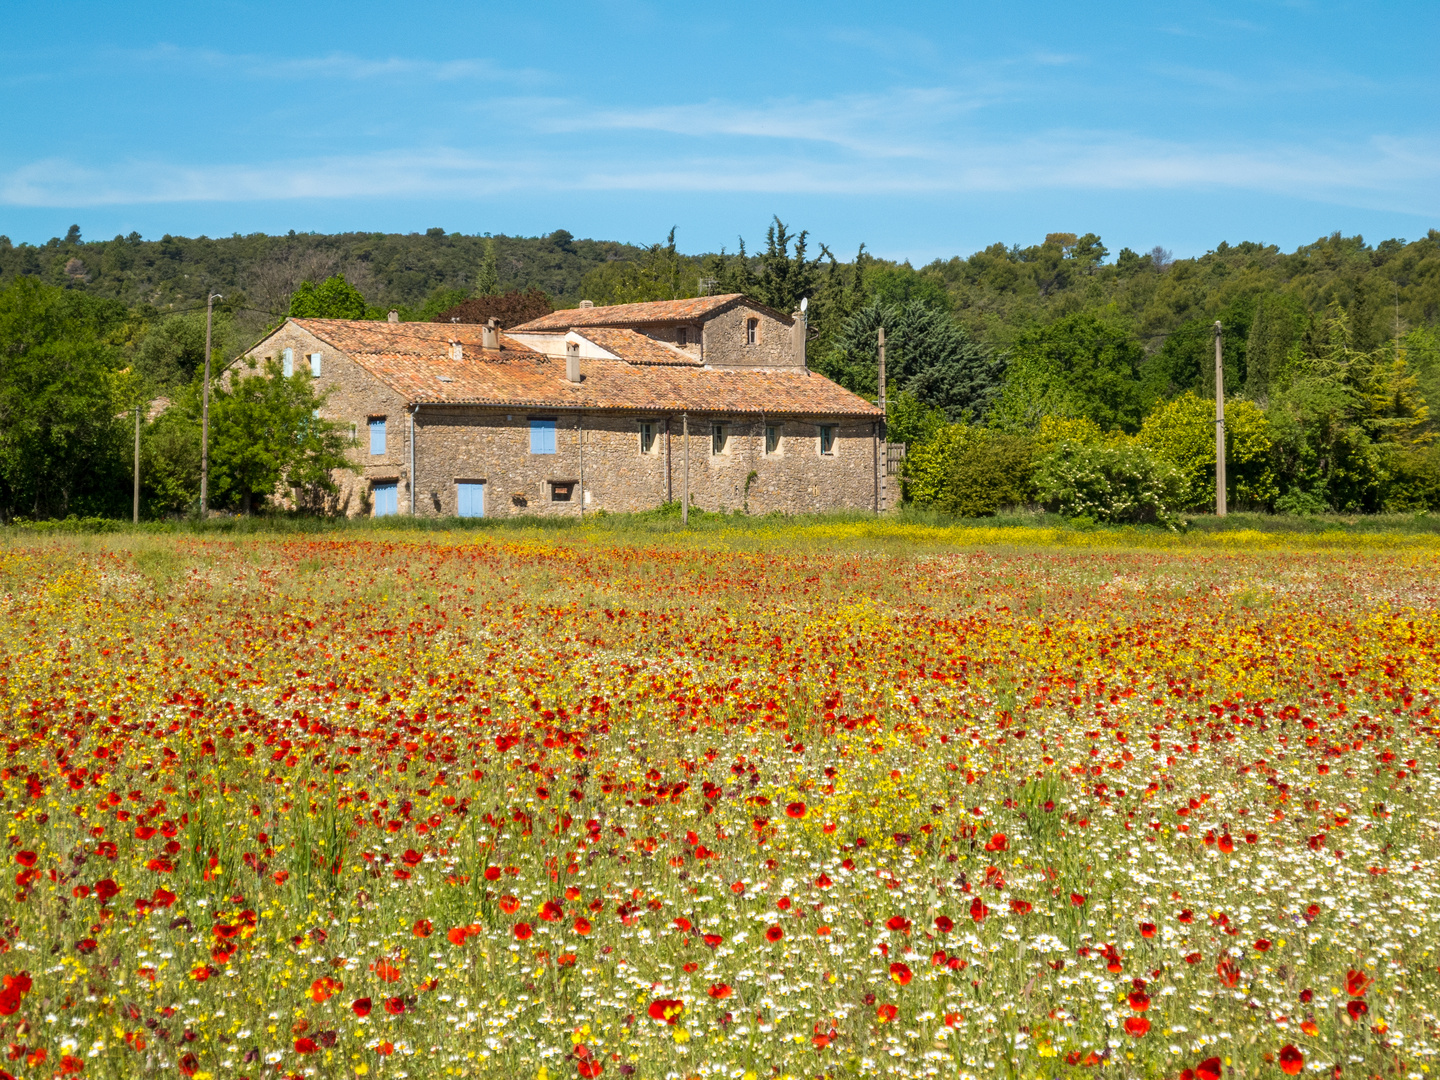 Haus in der Provence mit buntem Feld